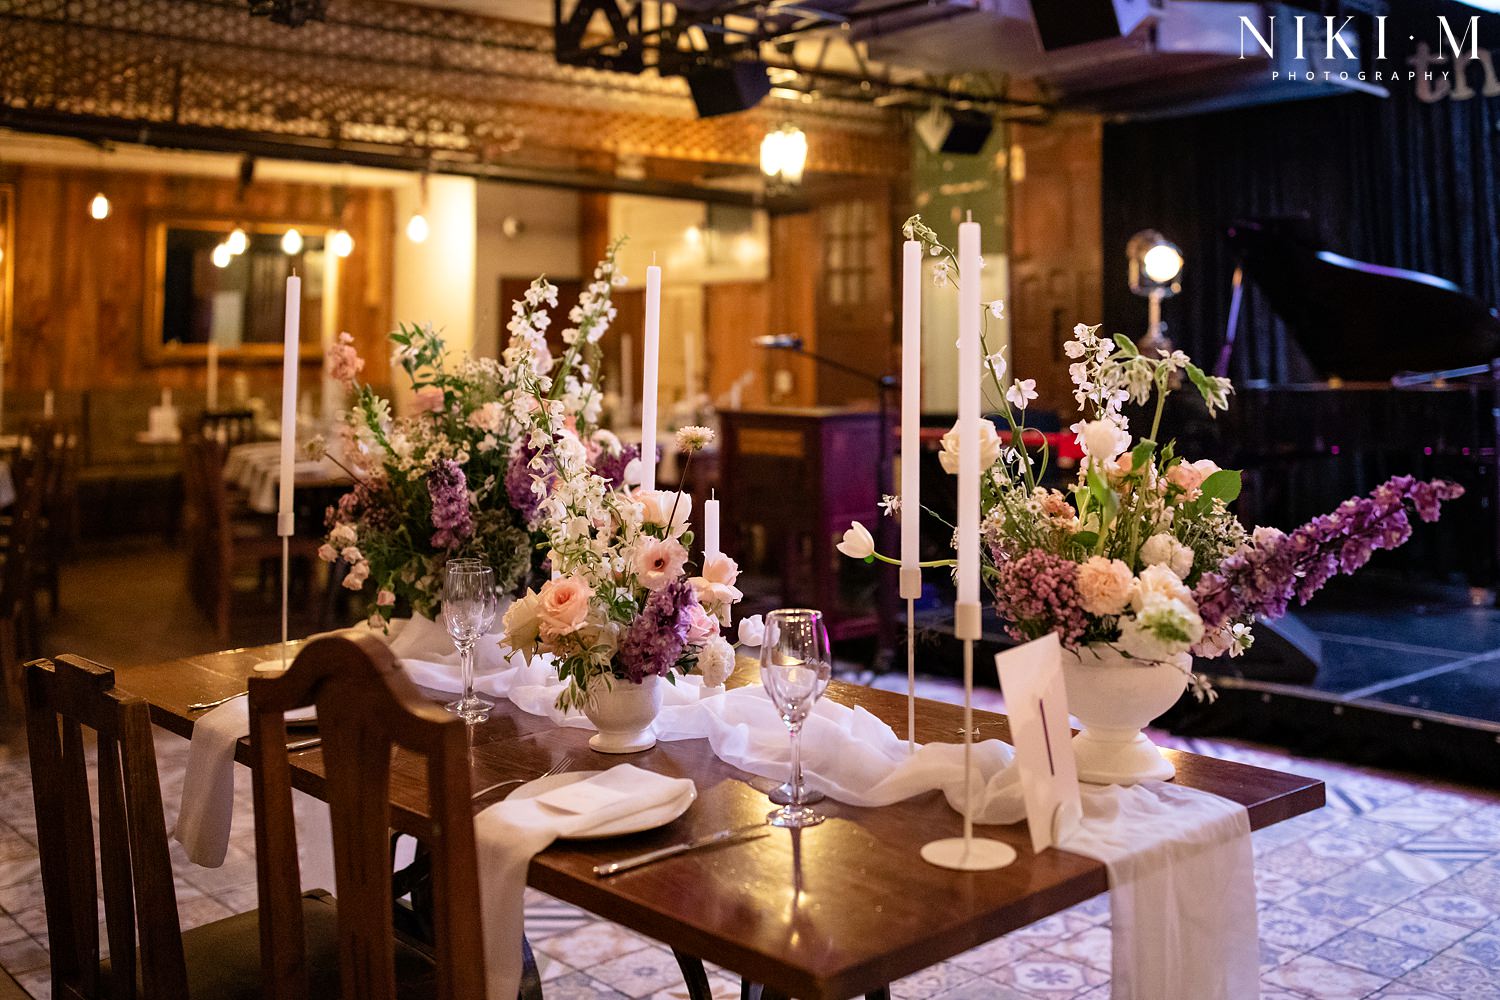 The Marabi Club decor for a Johannesburg wedding reception